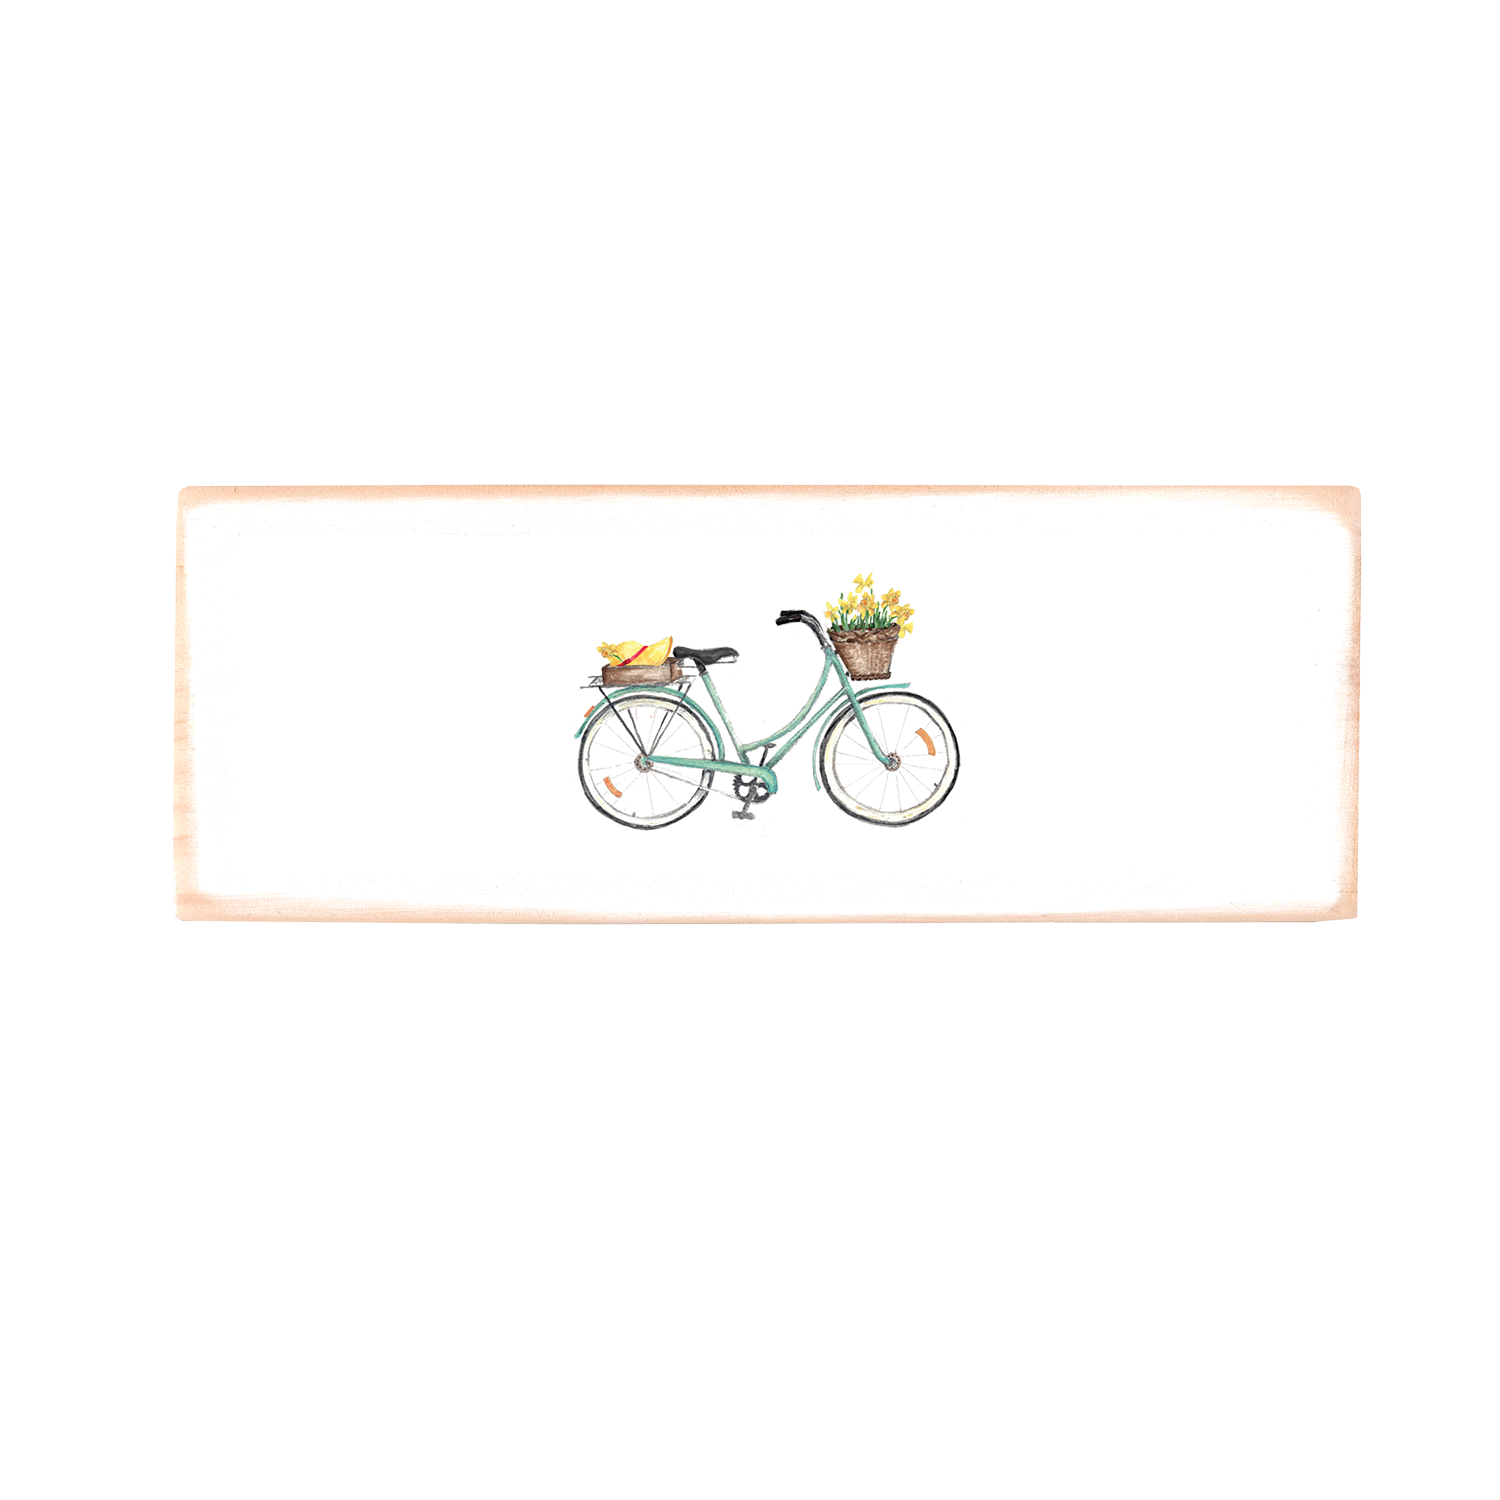 seafoam bike with daffodils and straw hat rectangle wood block